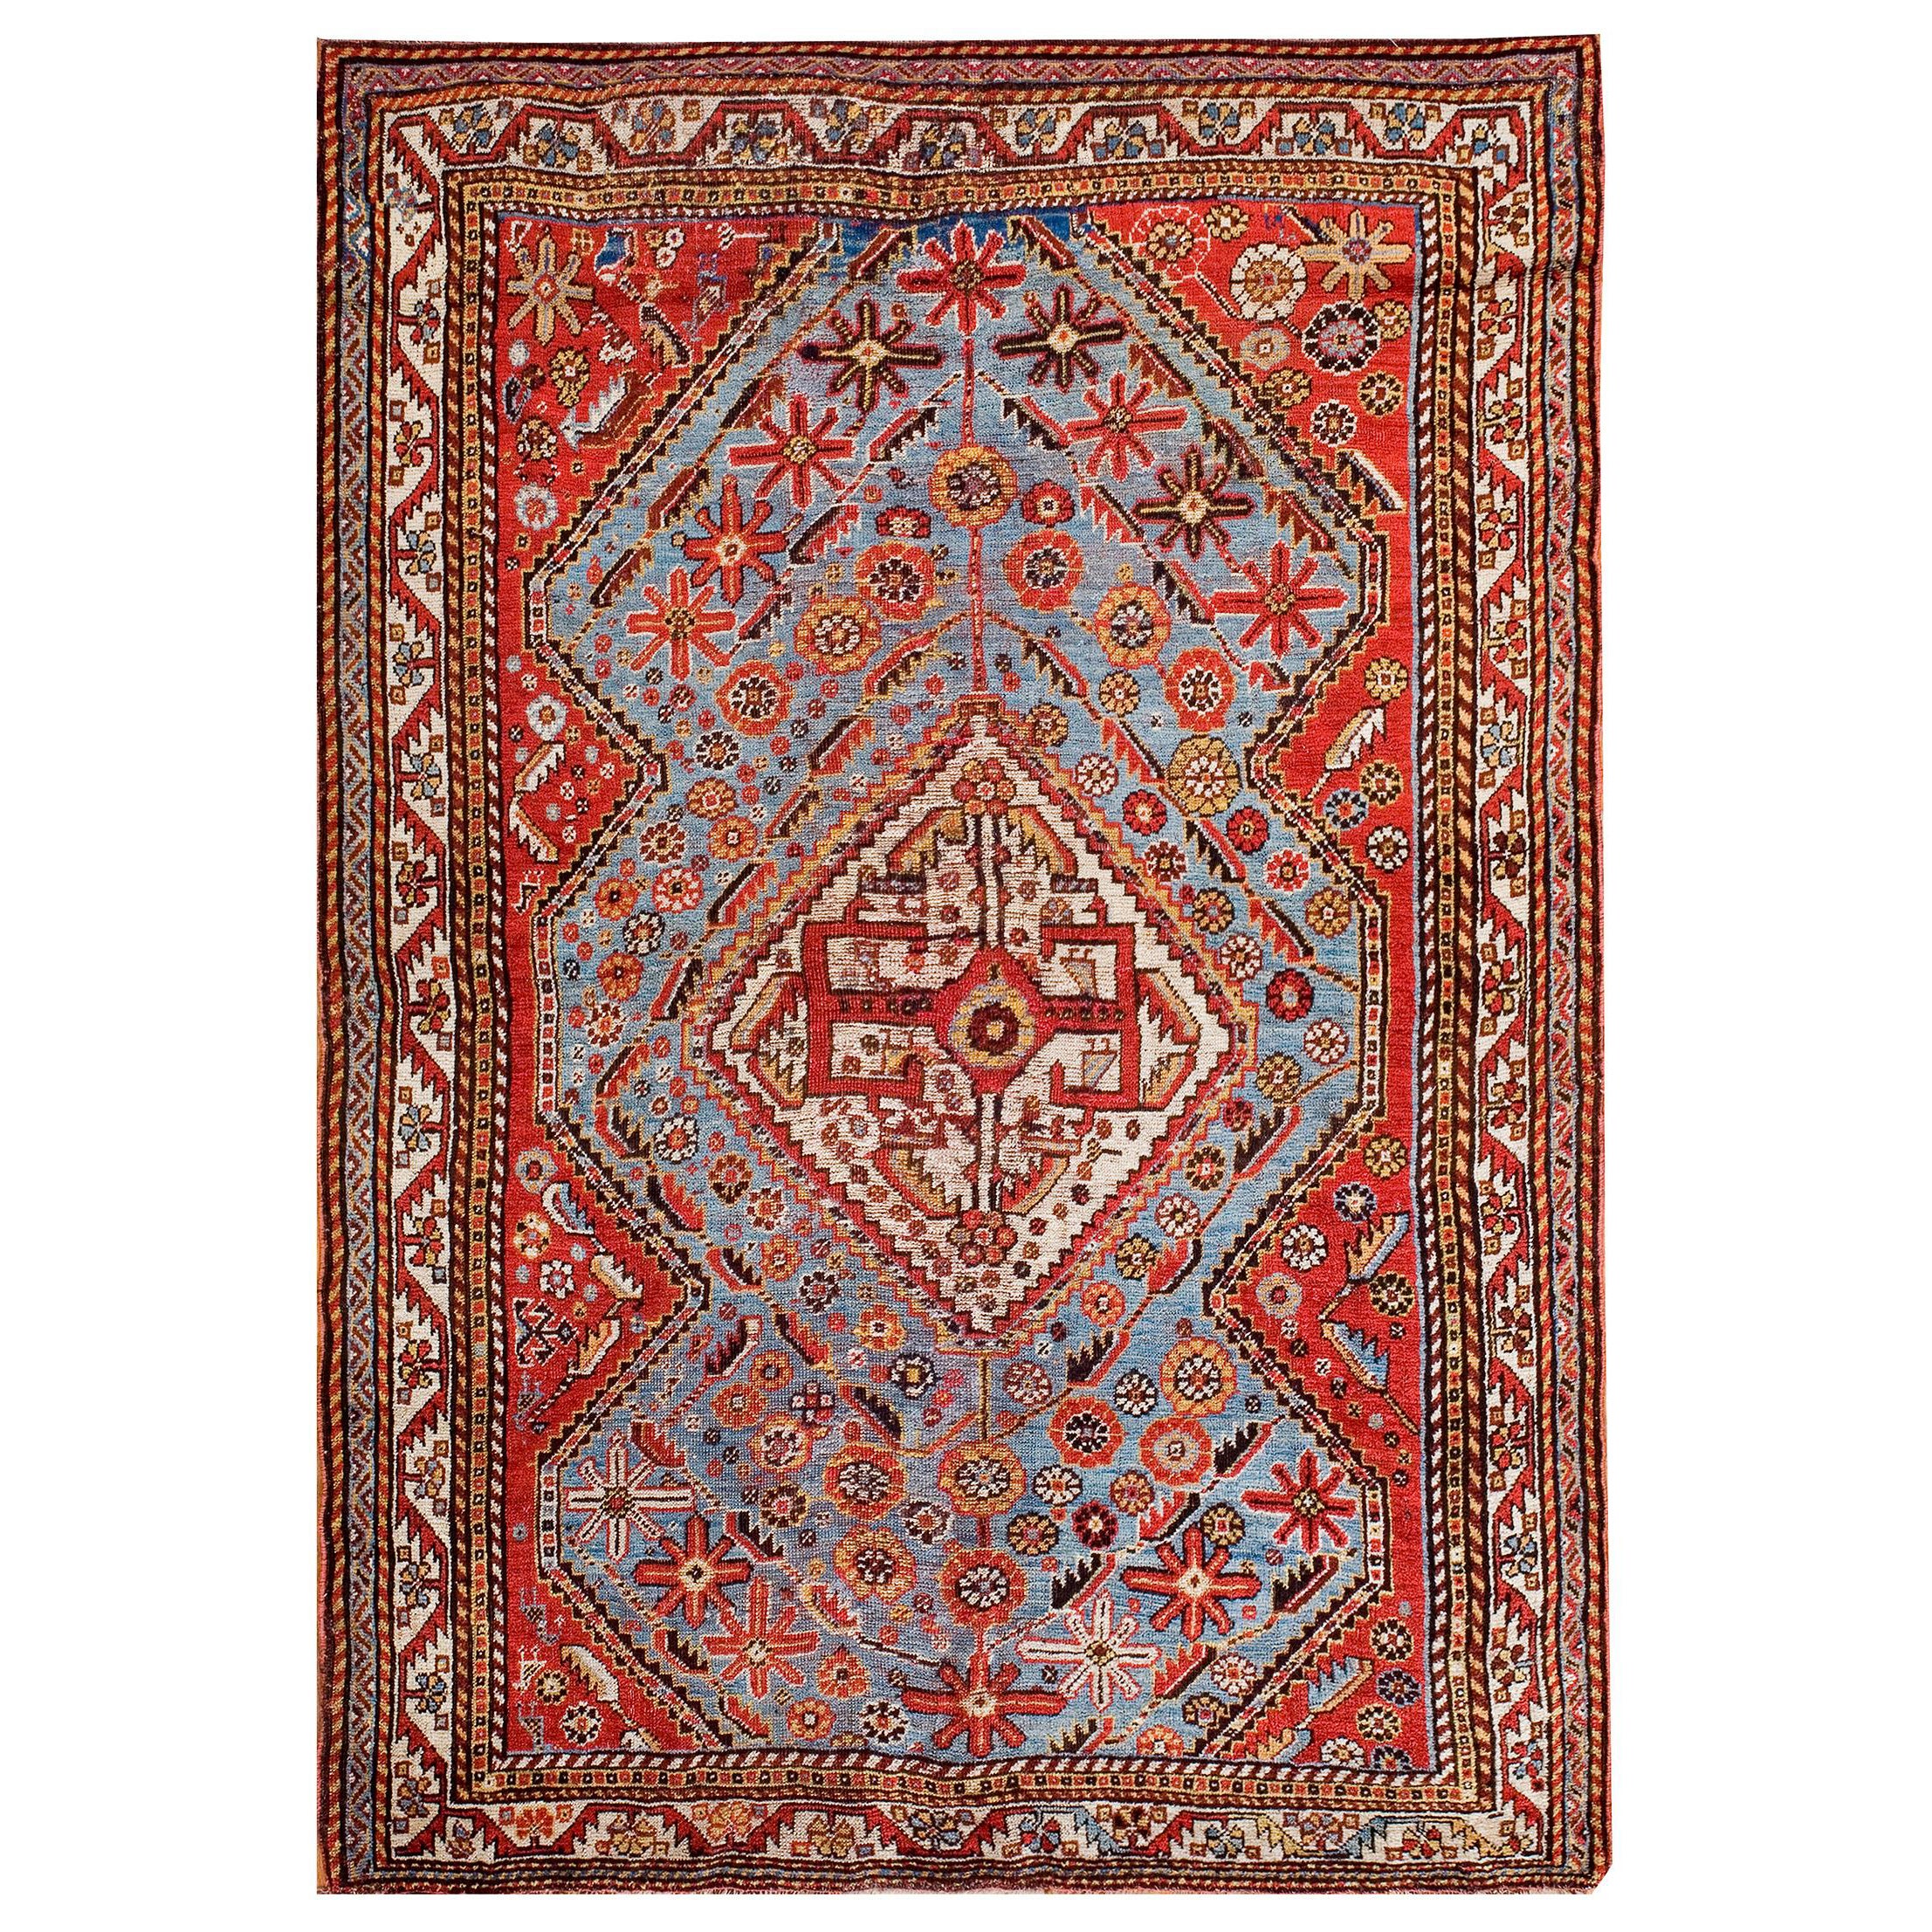 19th Century S. Persian Ghashgaie Rug ( 4'2" x 6'2" - 127 x 188 )